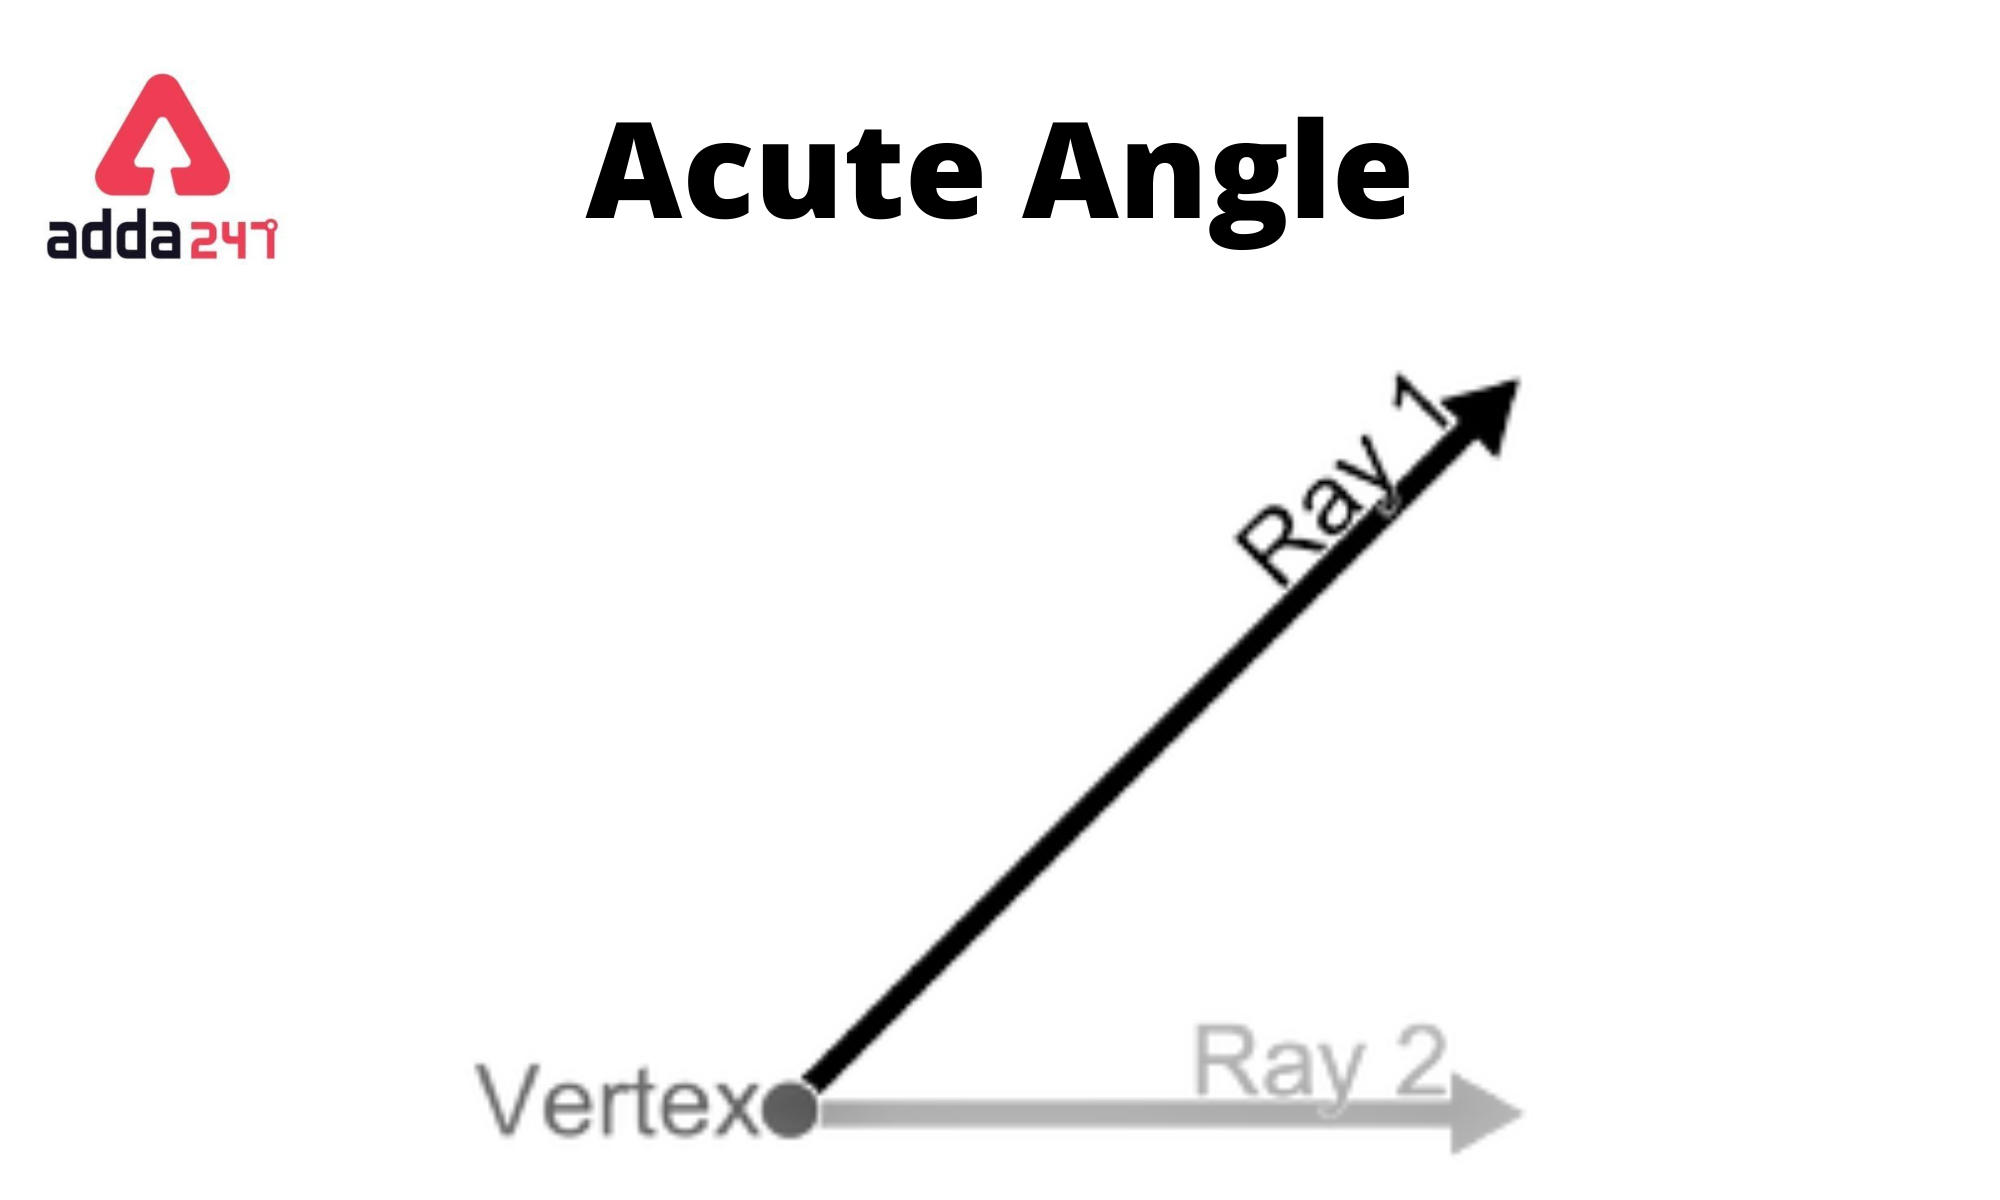 Acute Angle Definition - JavaTpoint